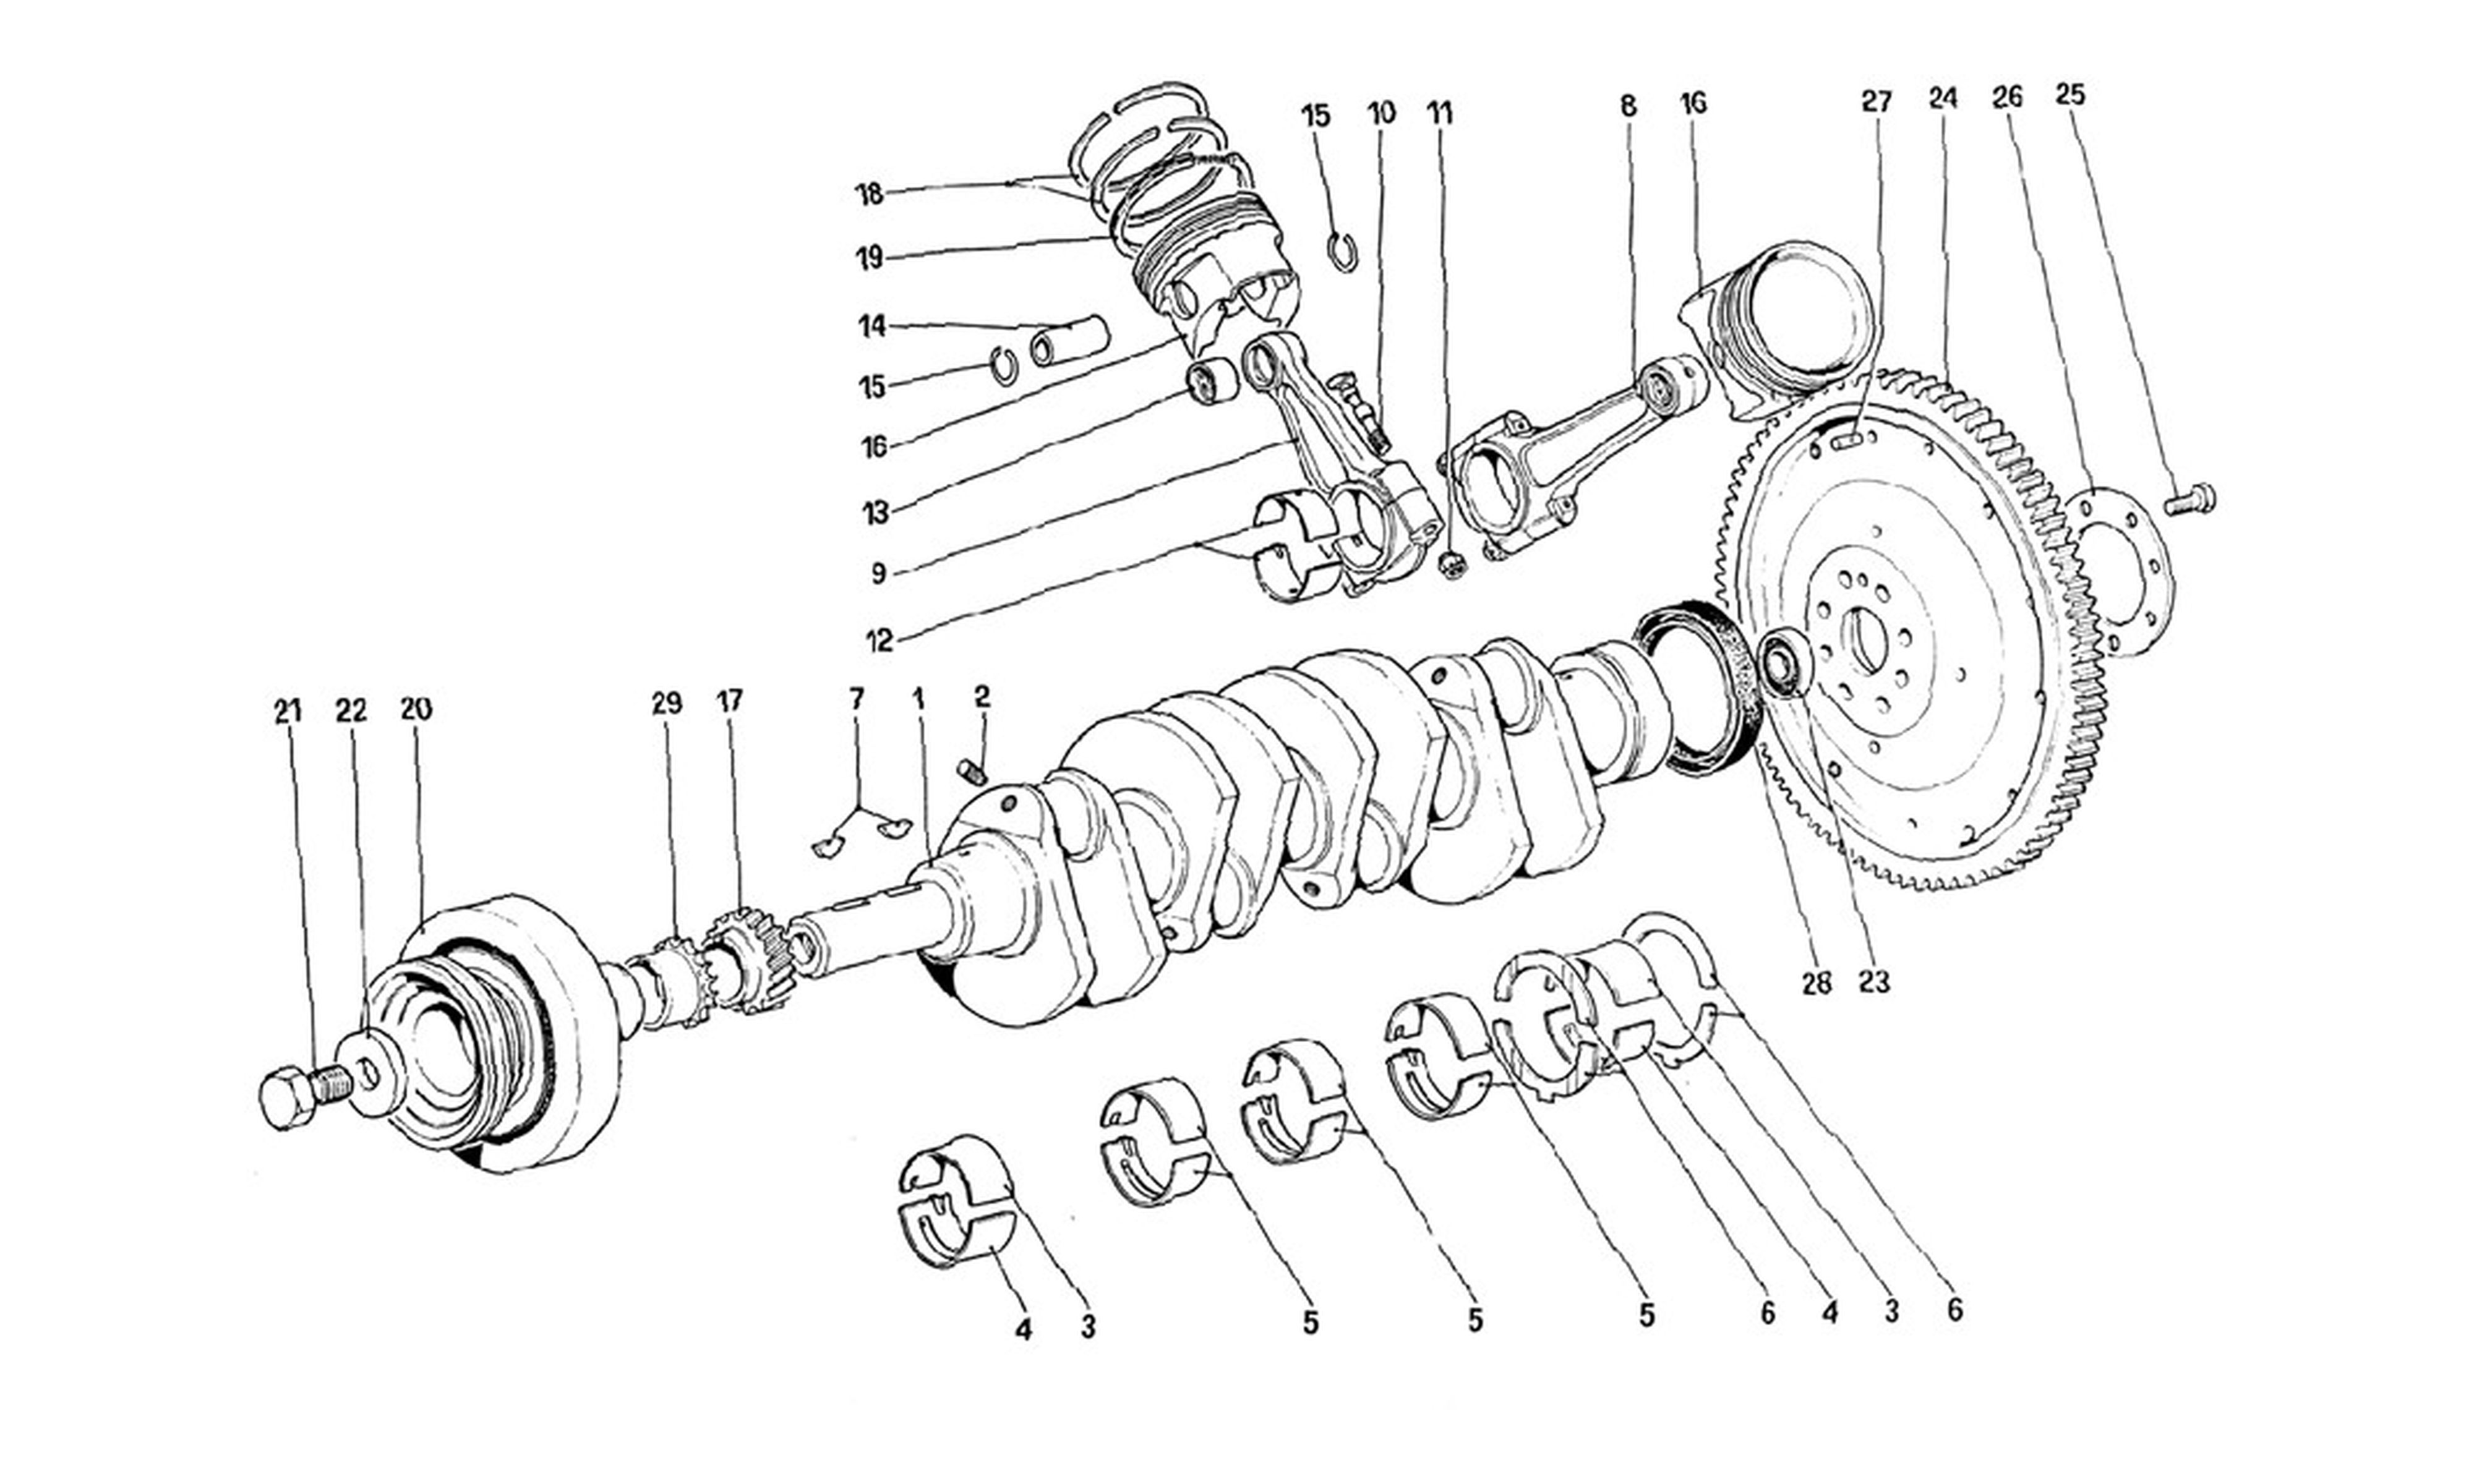 Schematic: Crankshaft - Connecting Rods And Pistons - Flywheel